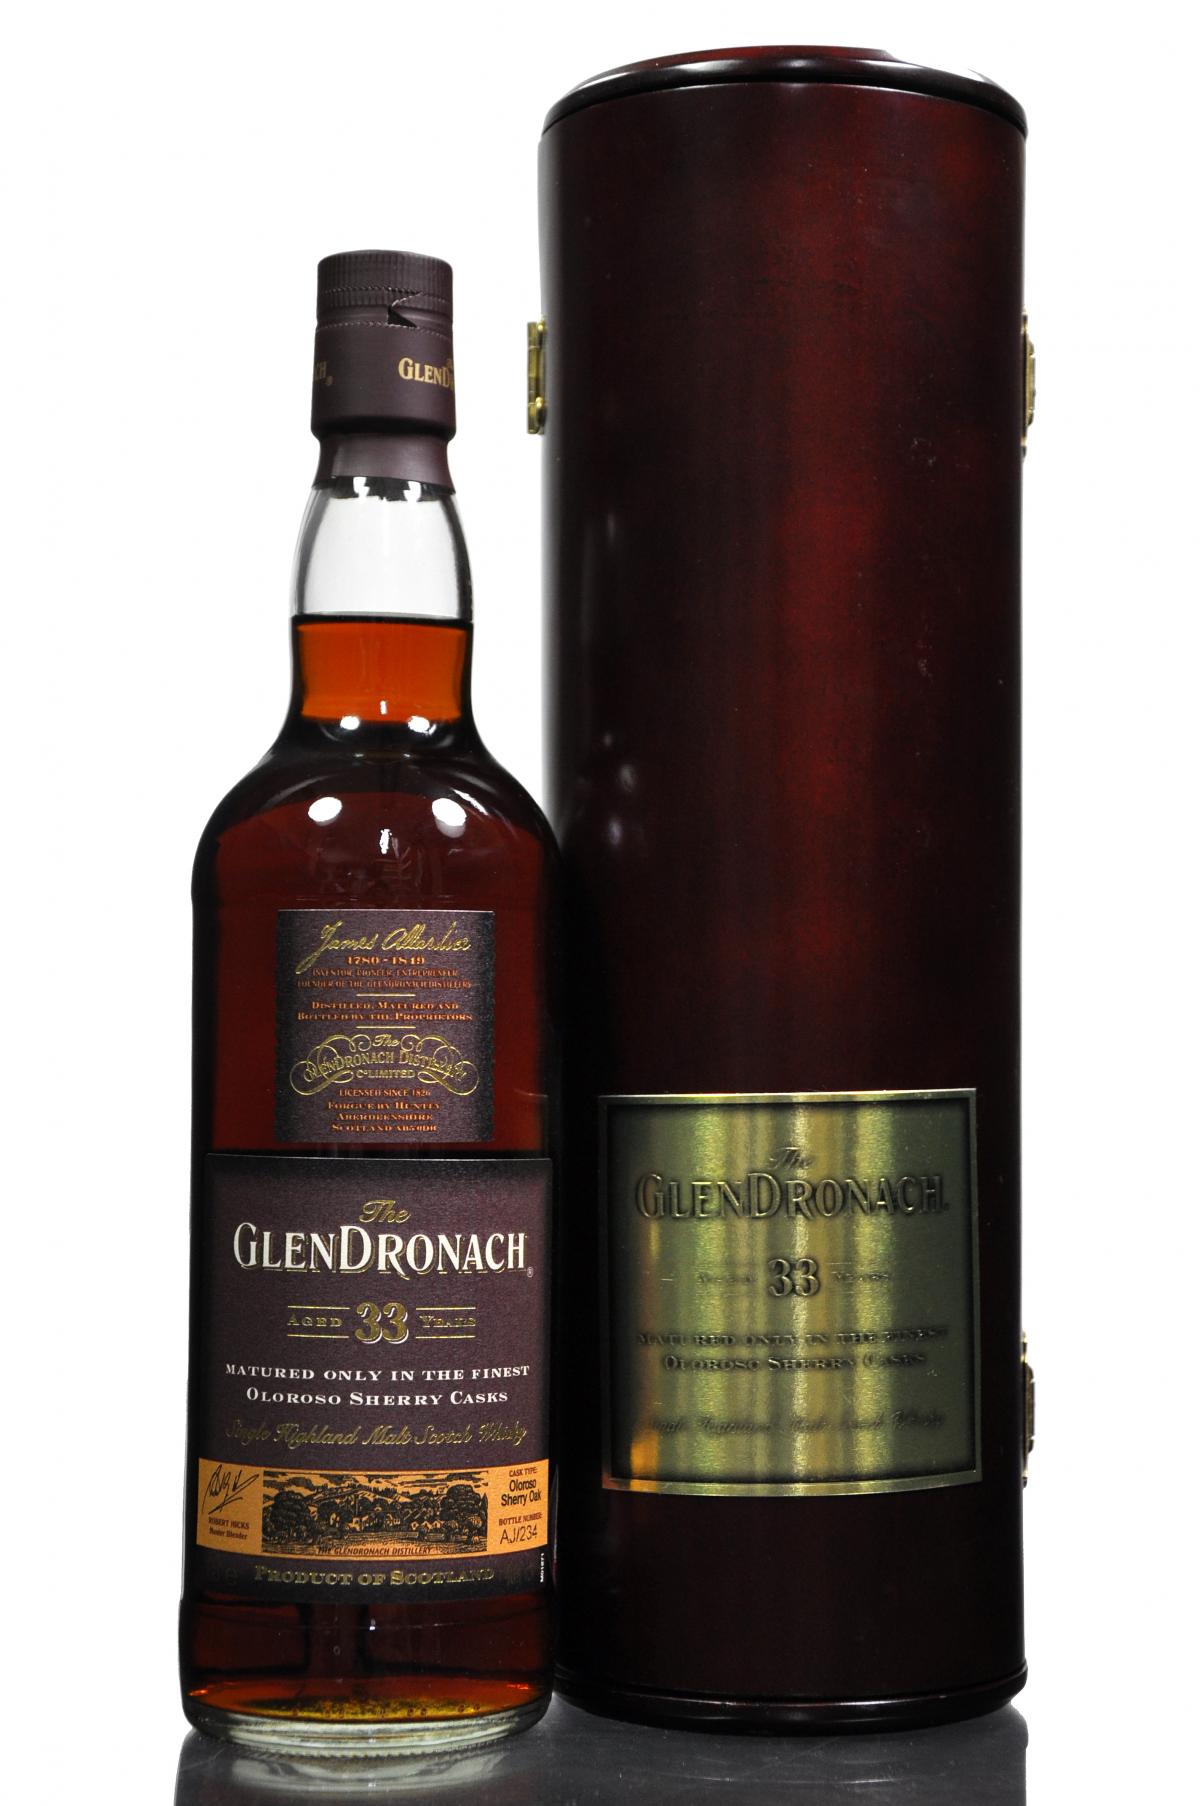 Glendronach 33 Year Old